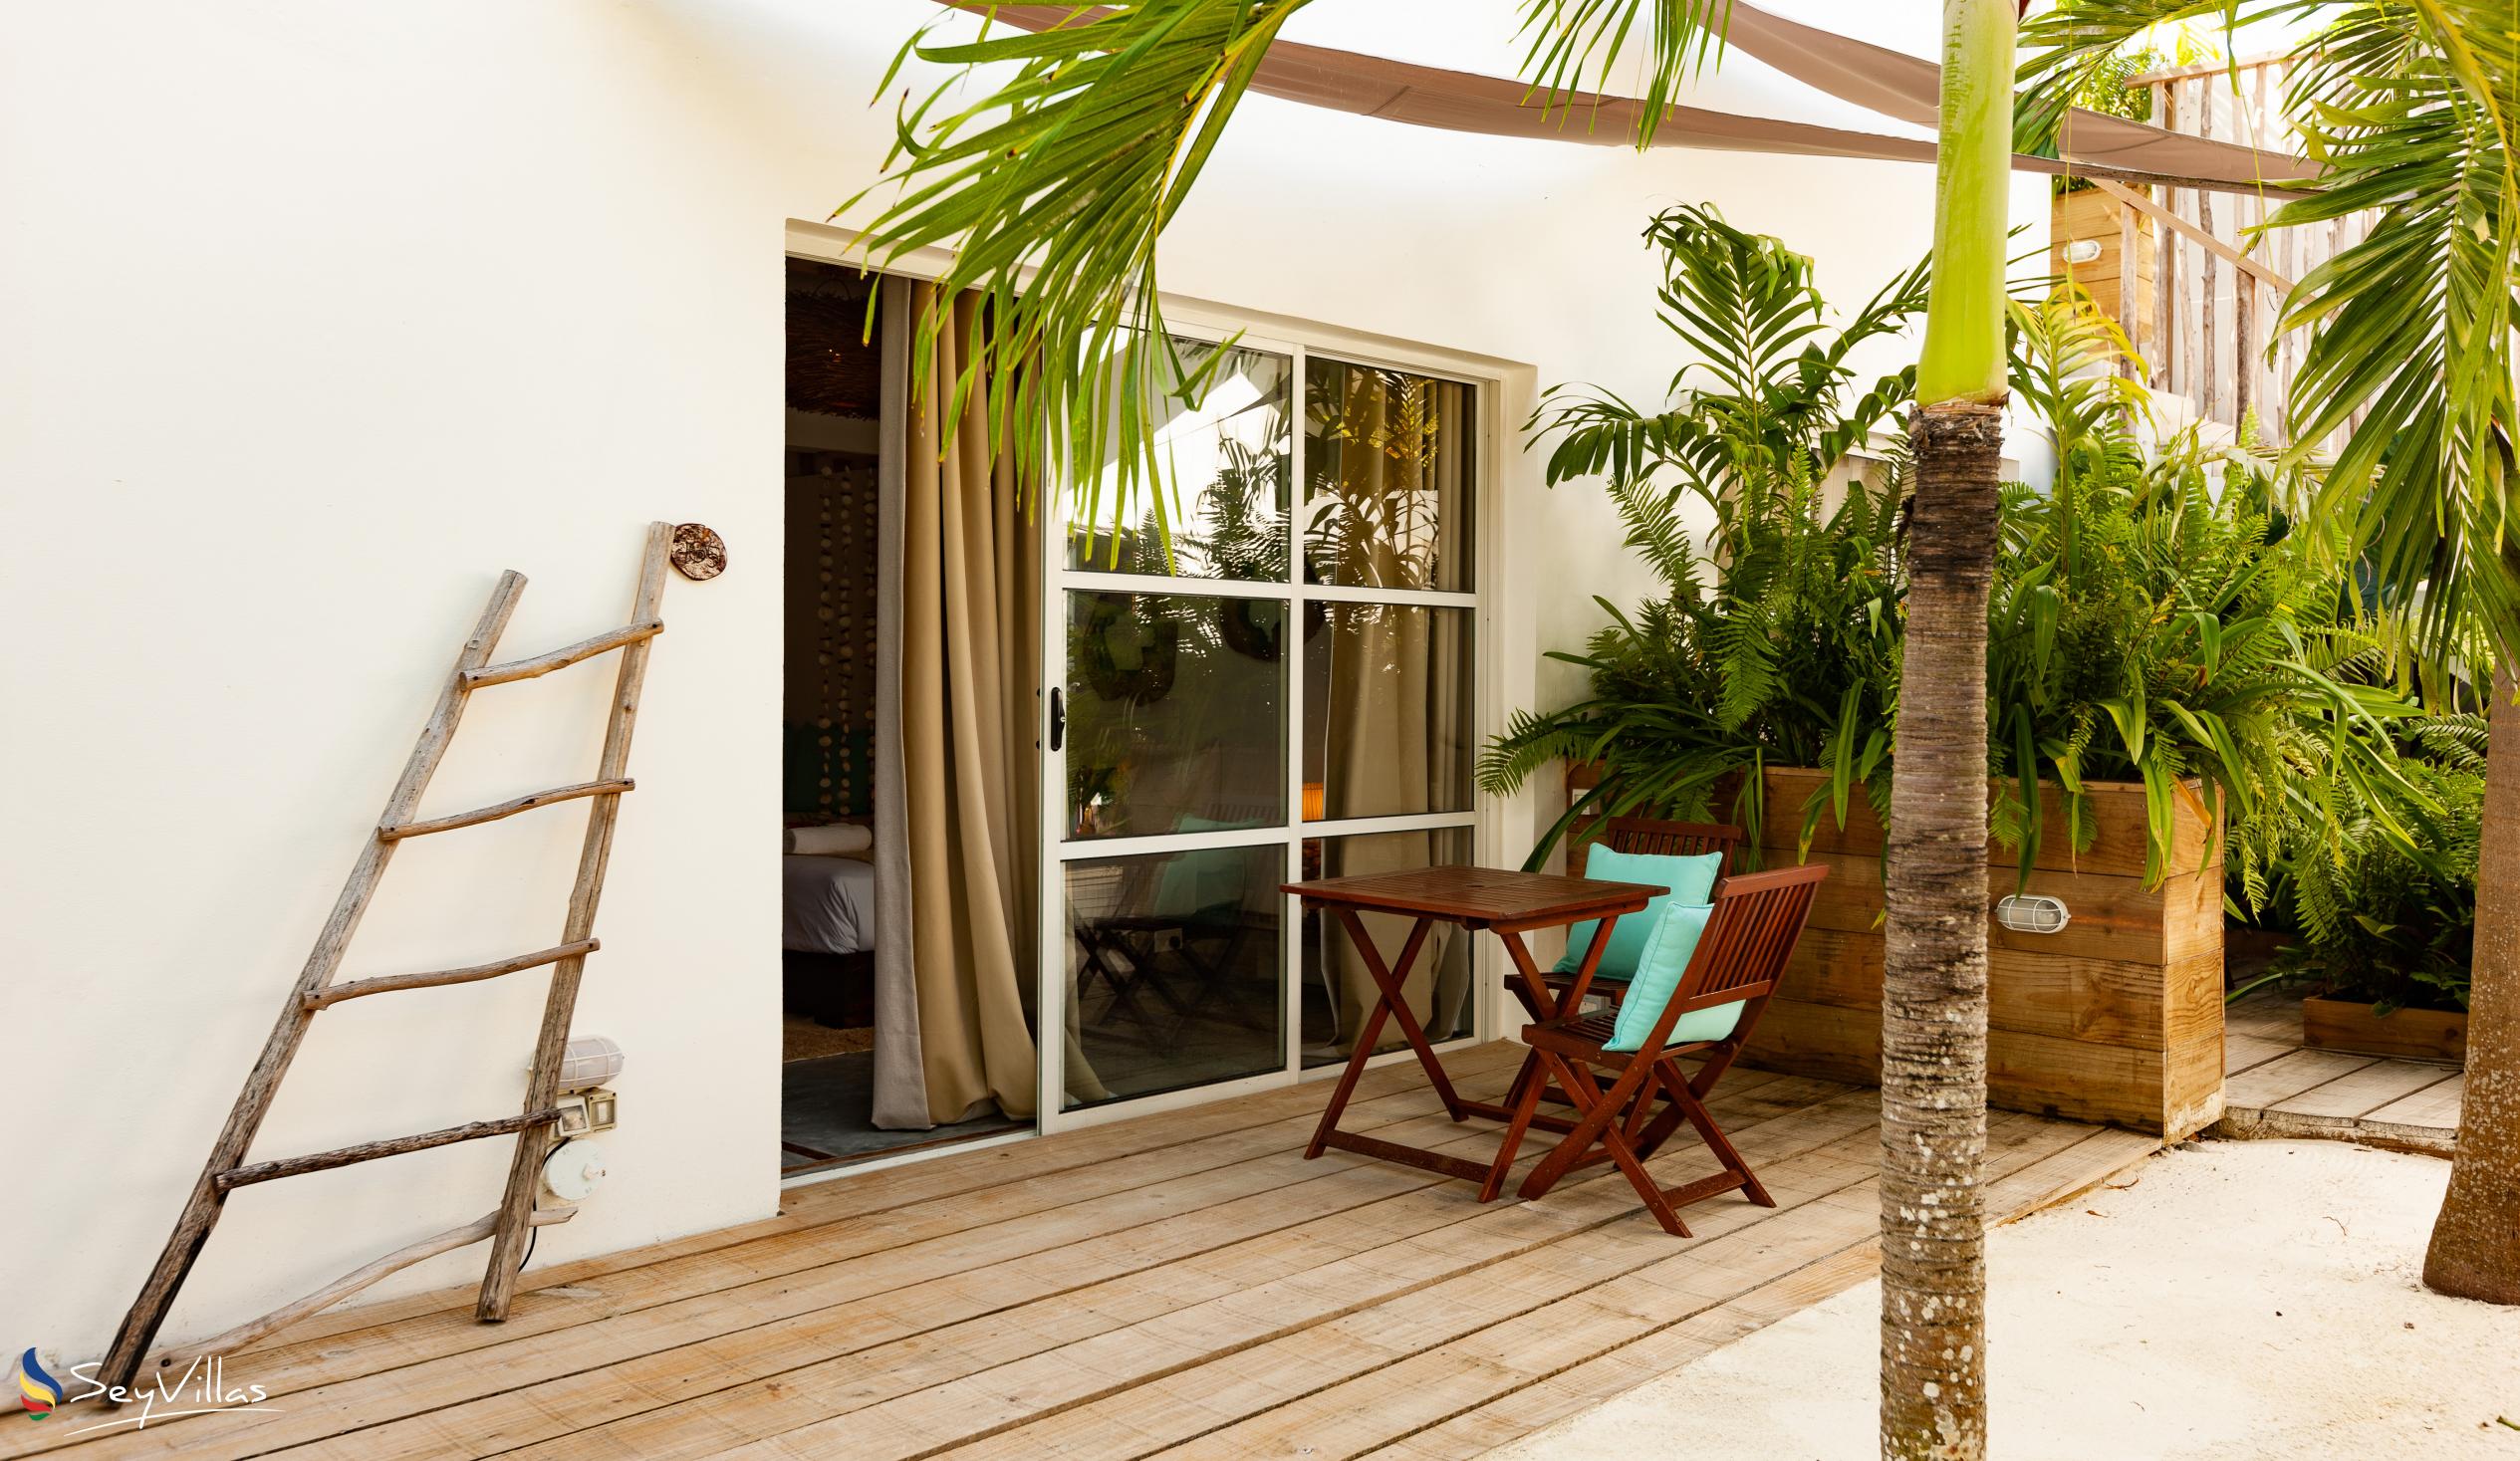 Photo 91: Bliss Hotel Praslin - Beach House - Beach Garden Room - Praslin (Seychelles)